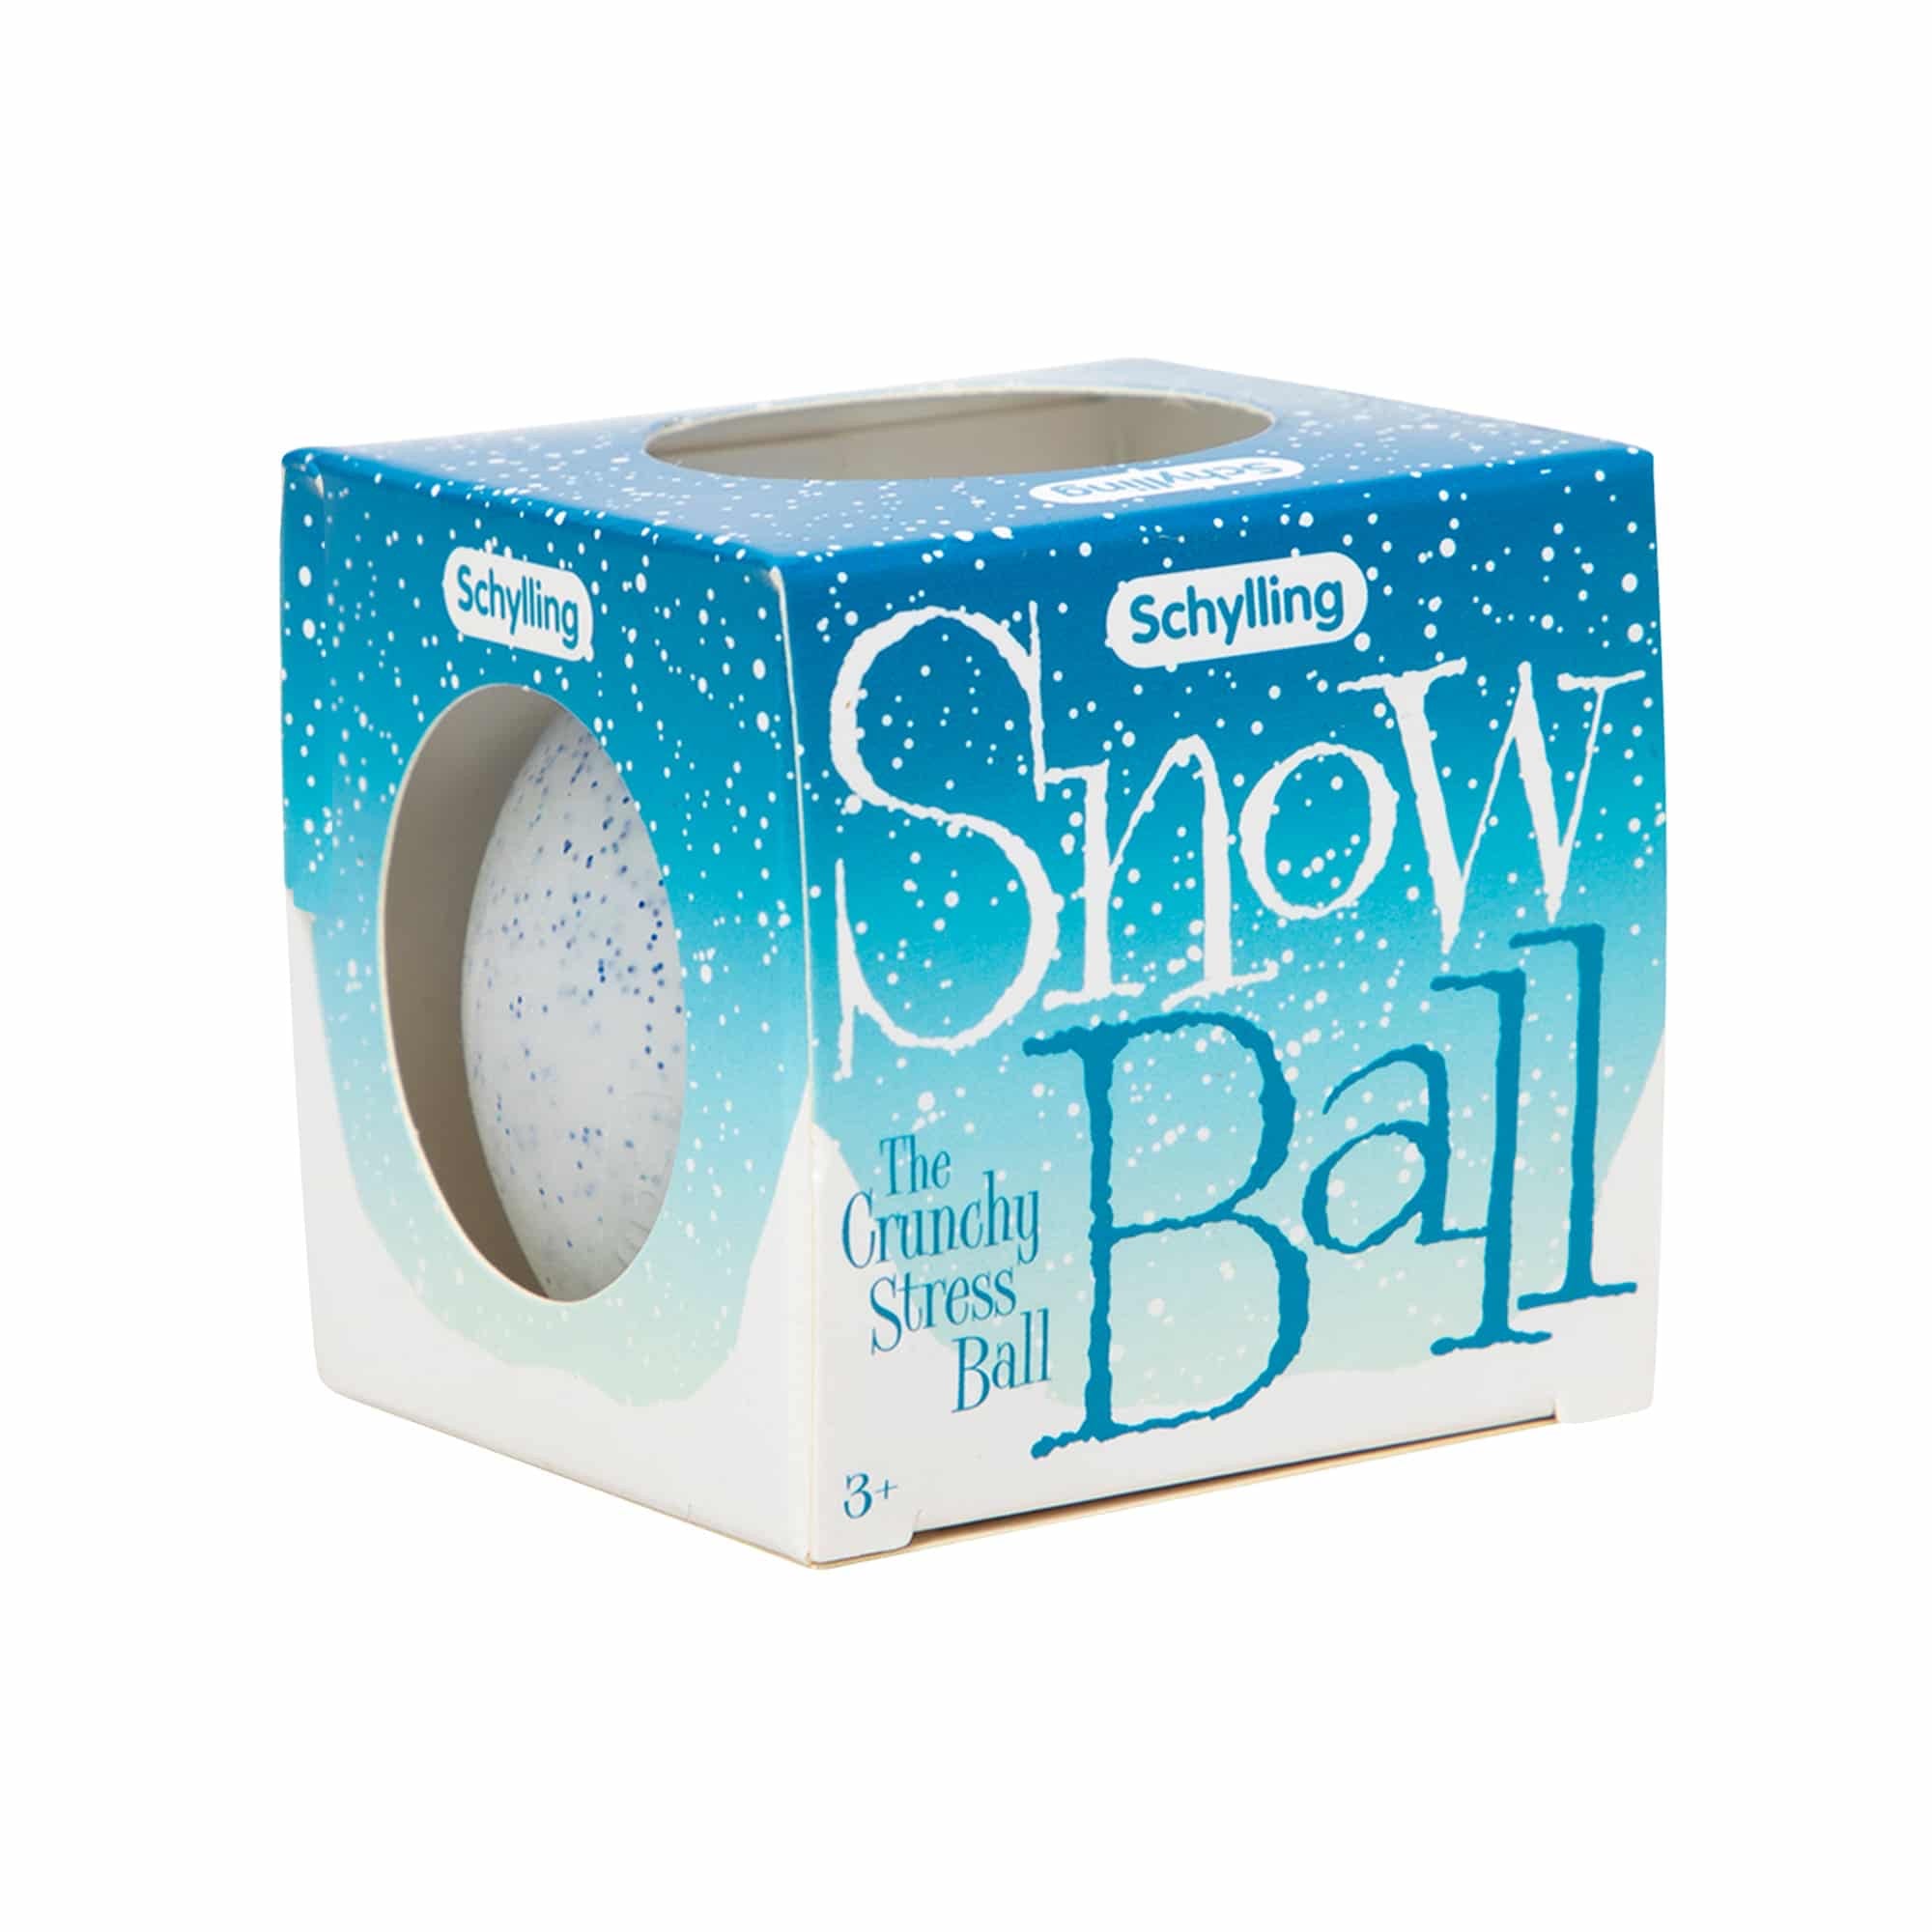 Snow Ball Crunch by Schylling #SNBC